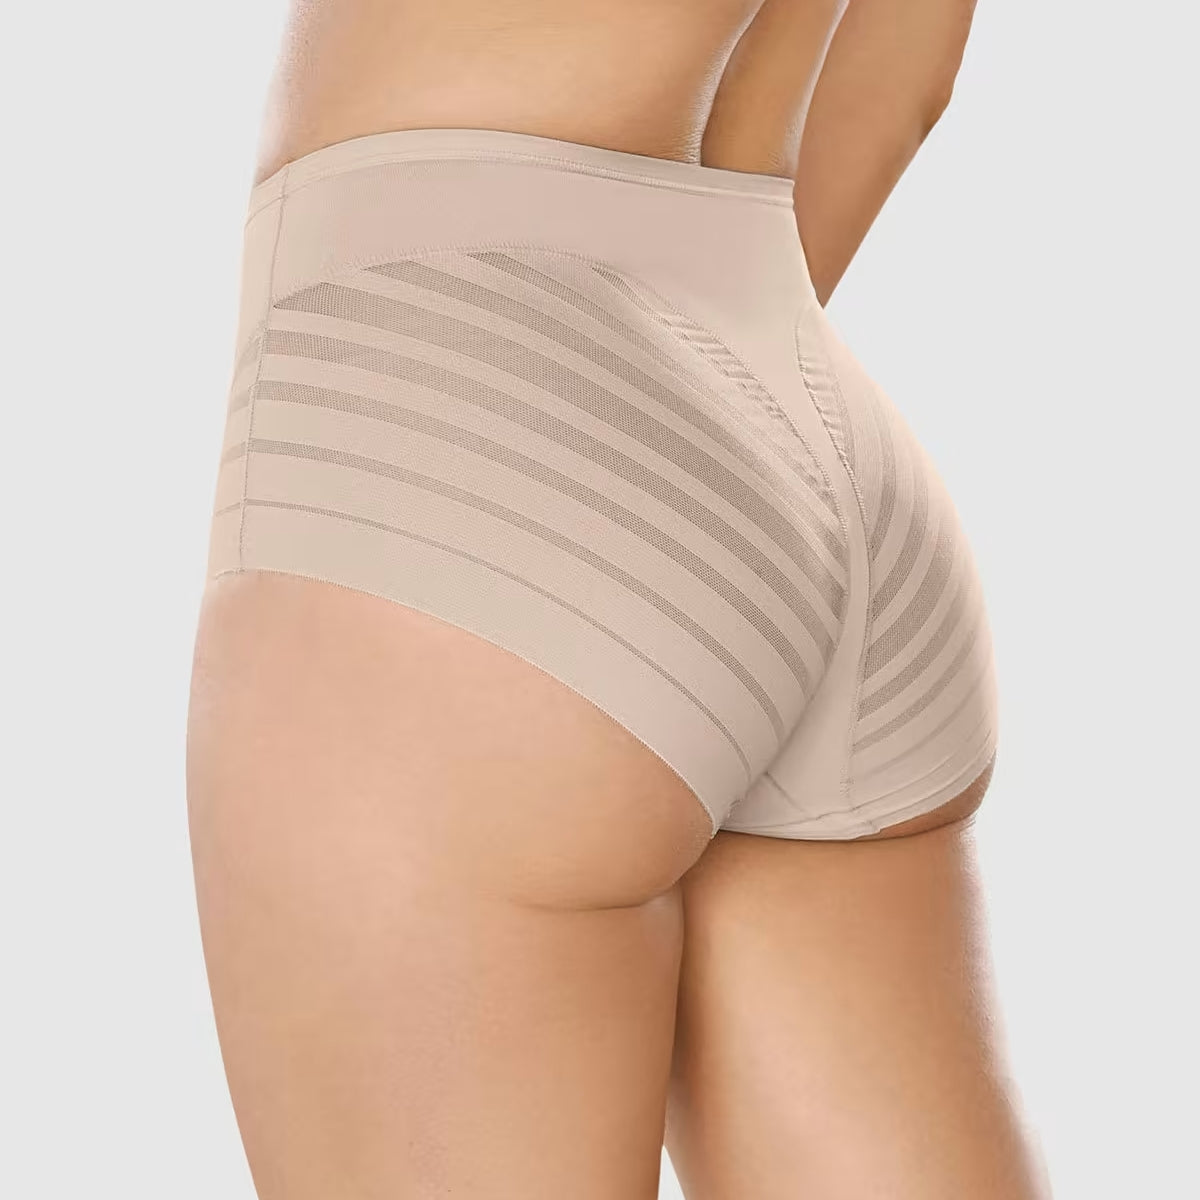 Body Slimmers & Control Underwear for Women